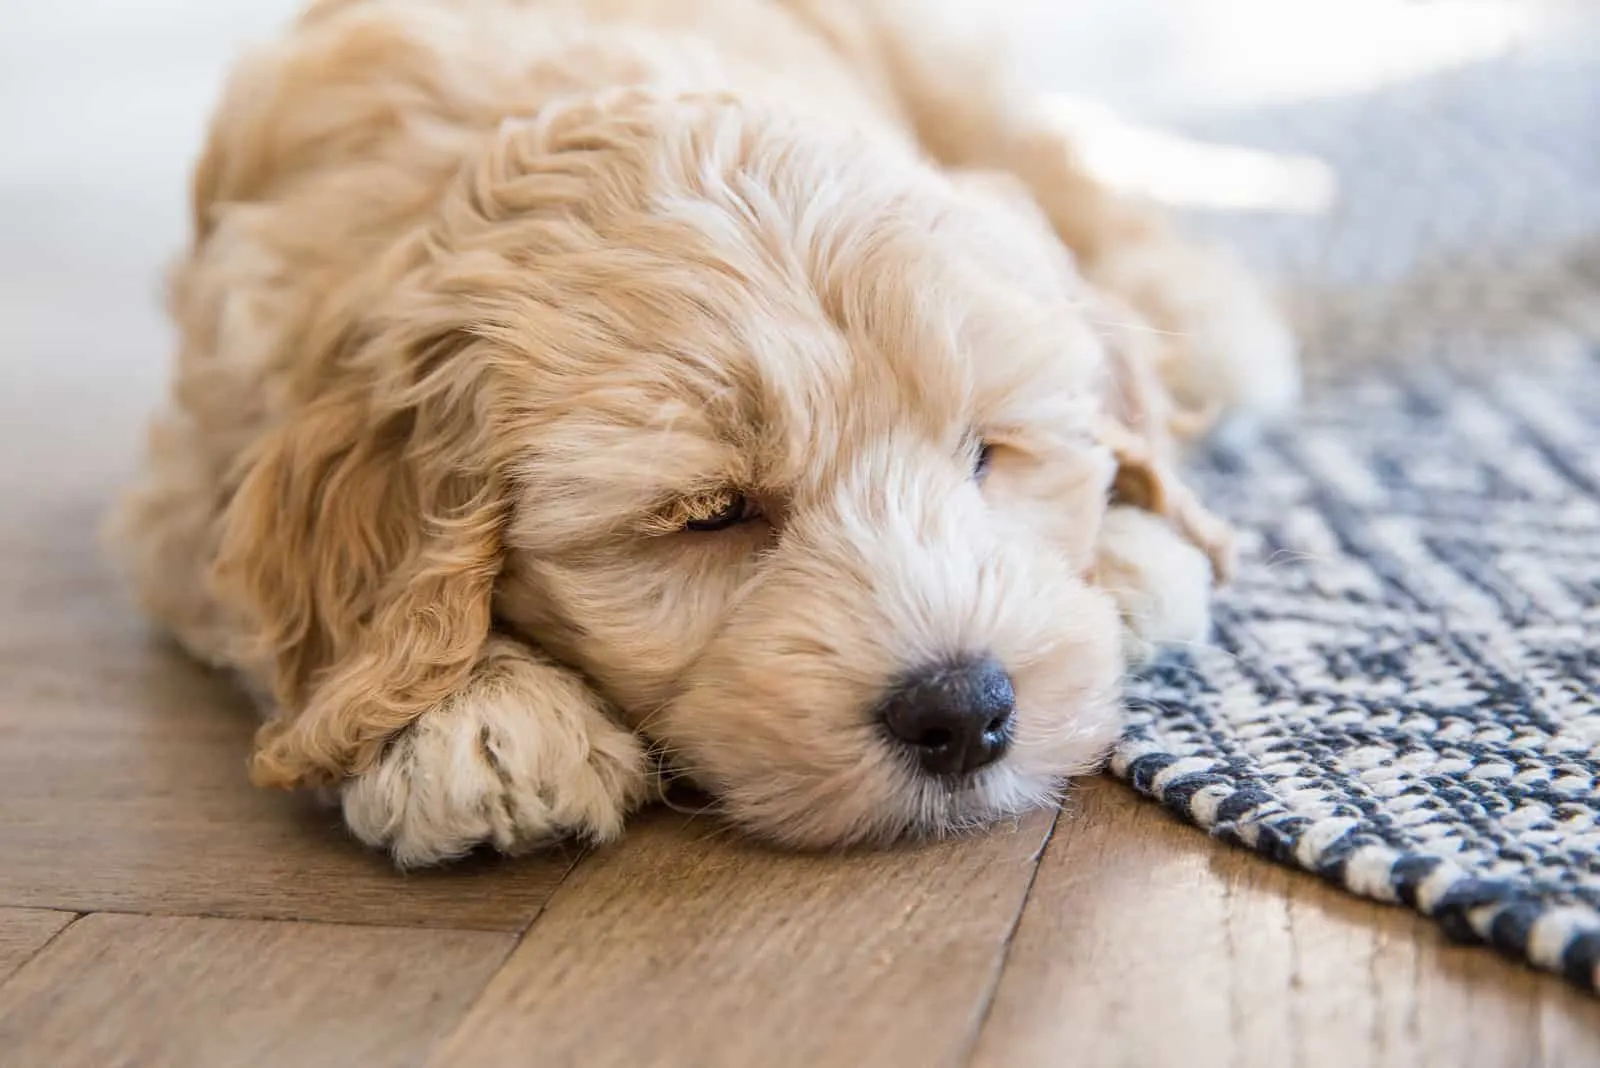 Labradoodle pup inside sleeping on the floor beside a rug